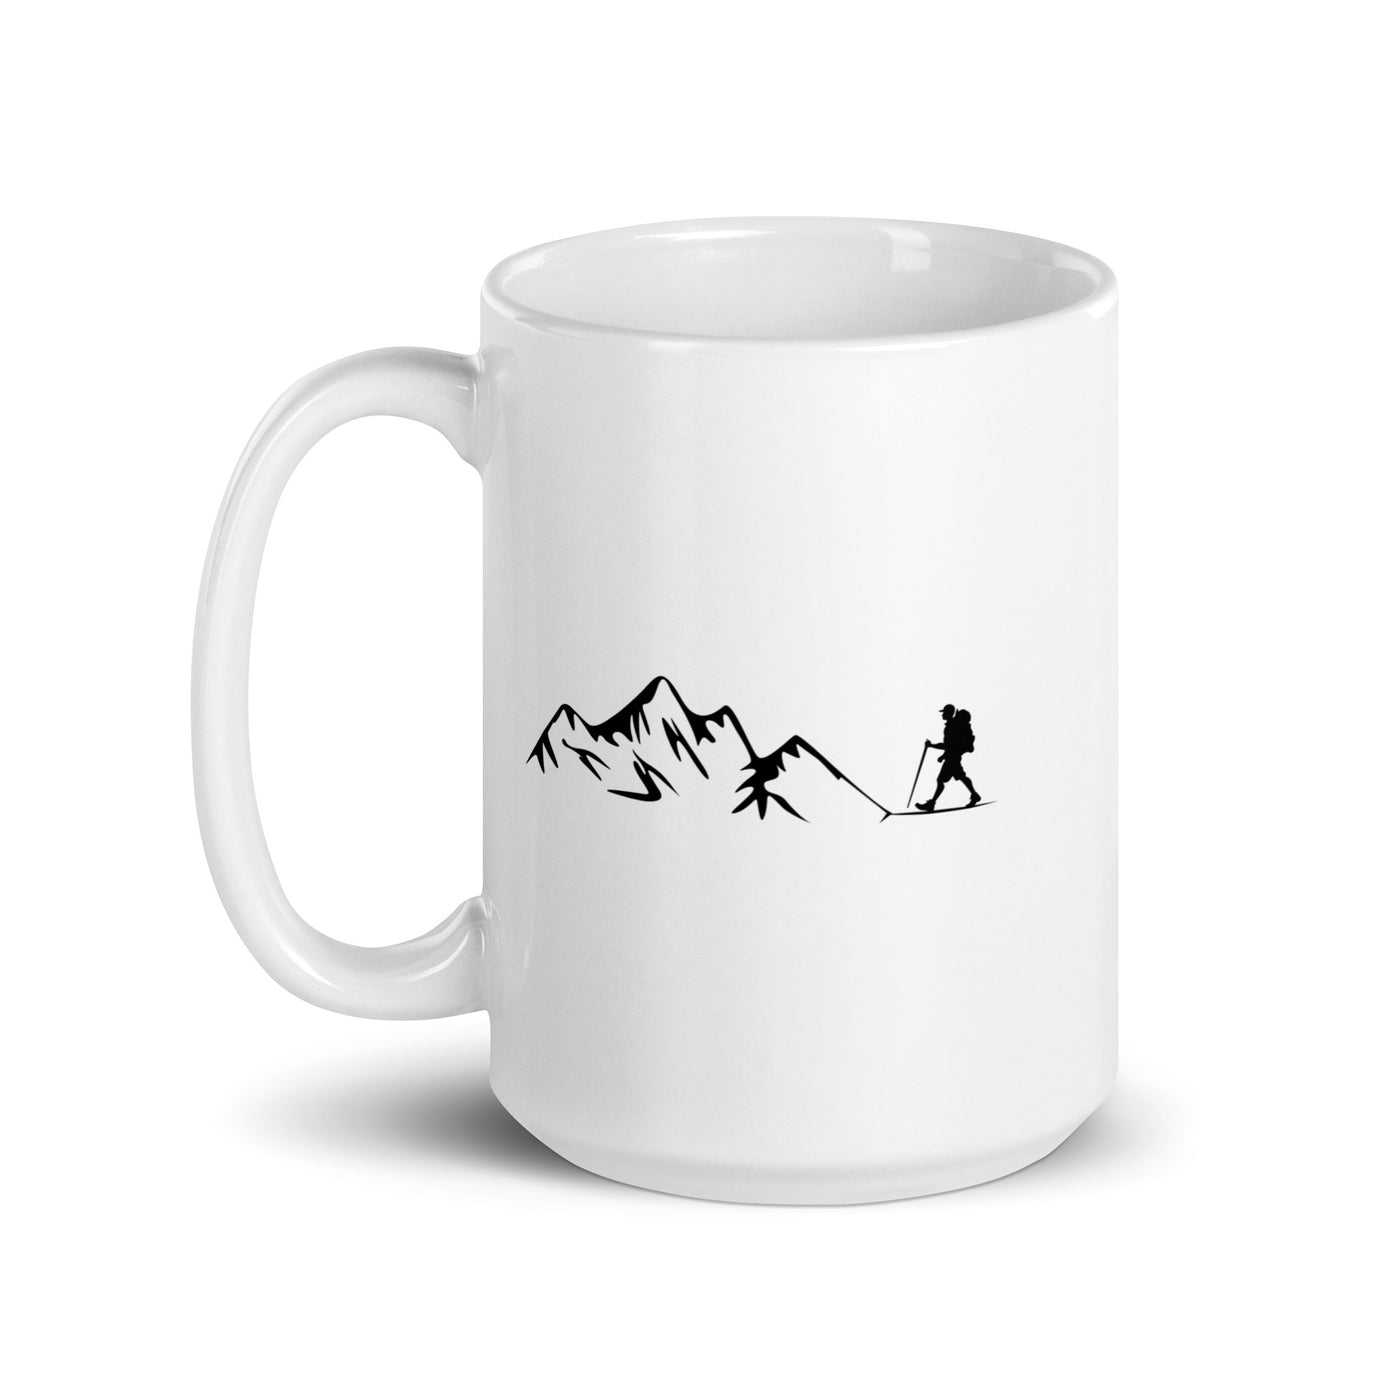 Mountain - Hiking (24) - Tasse wandern